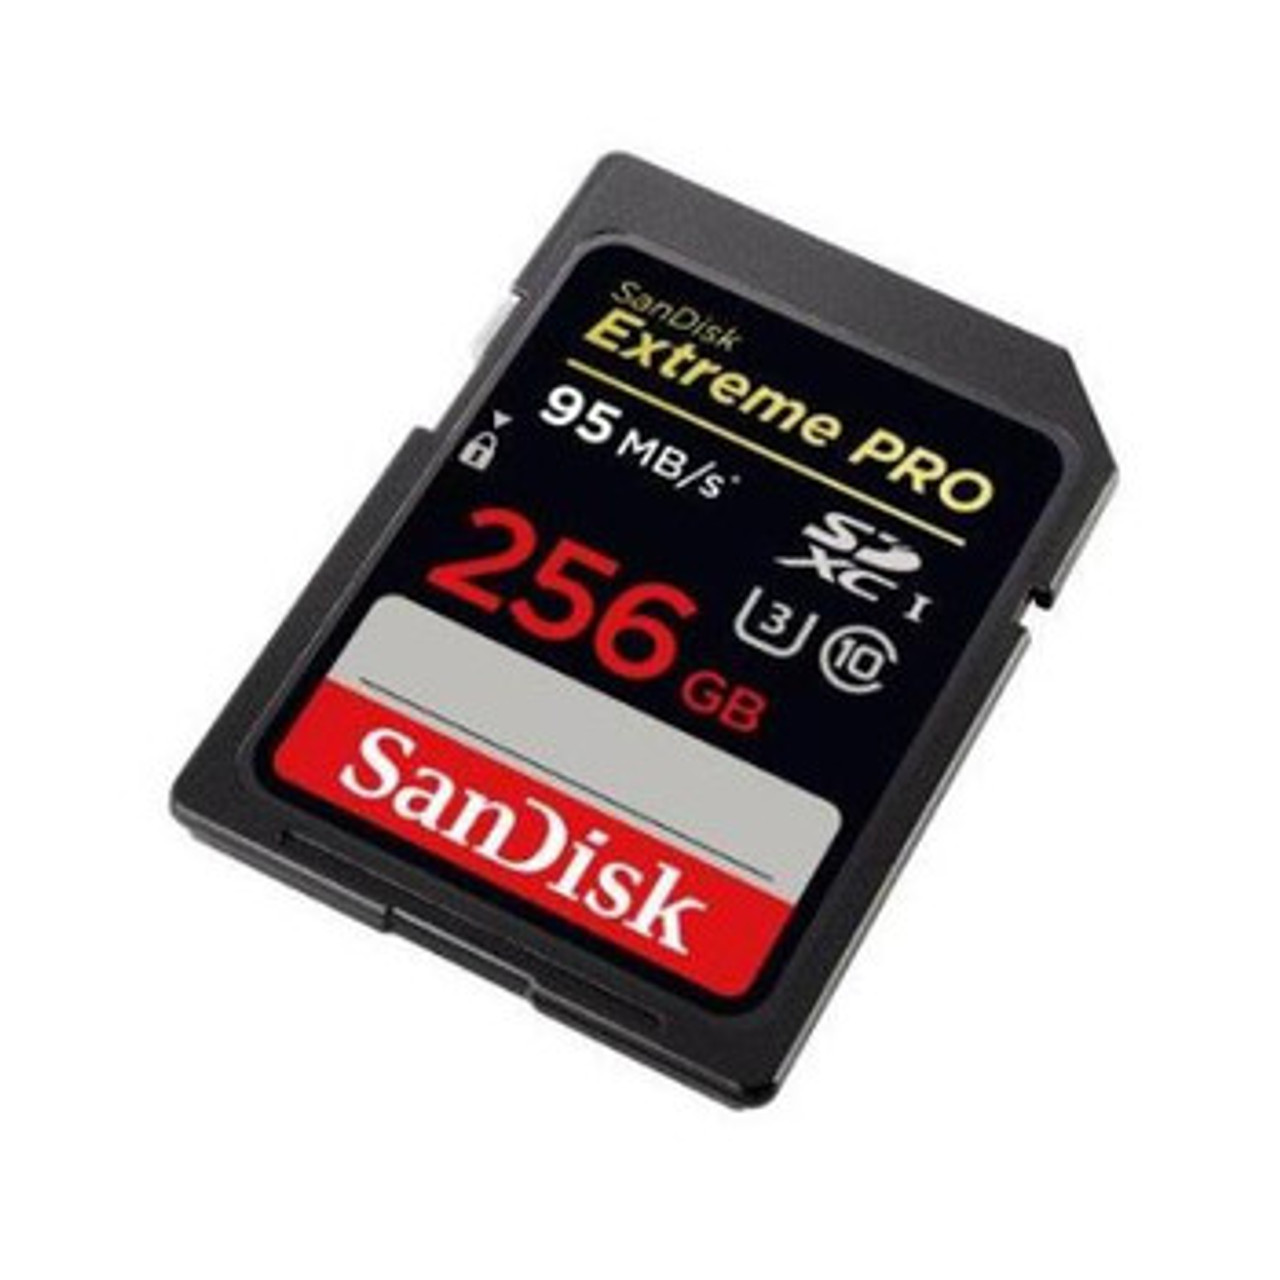 SDSDXPA-256G-G46 | Sandisk | Extreme Pro 256Gb Class 10 Sdxc Uhs-I Flash Memory Card